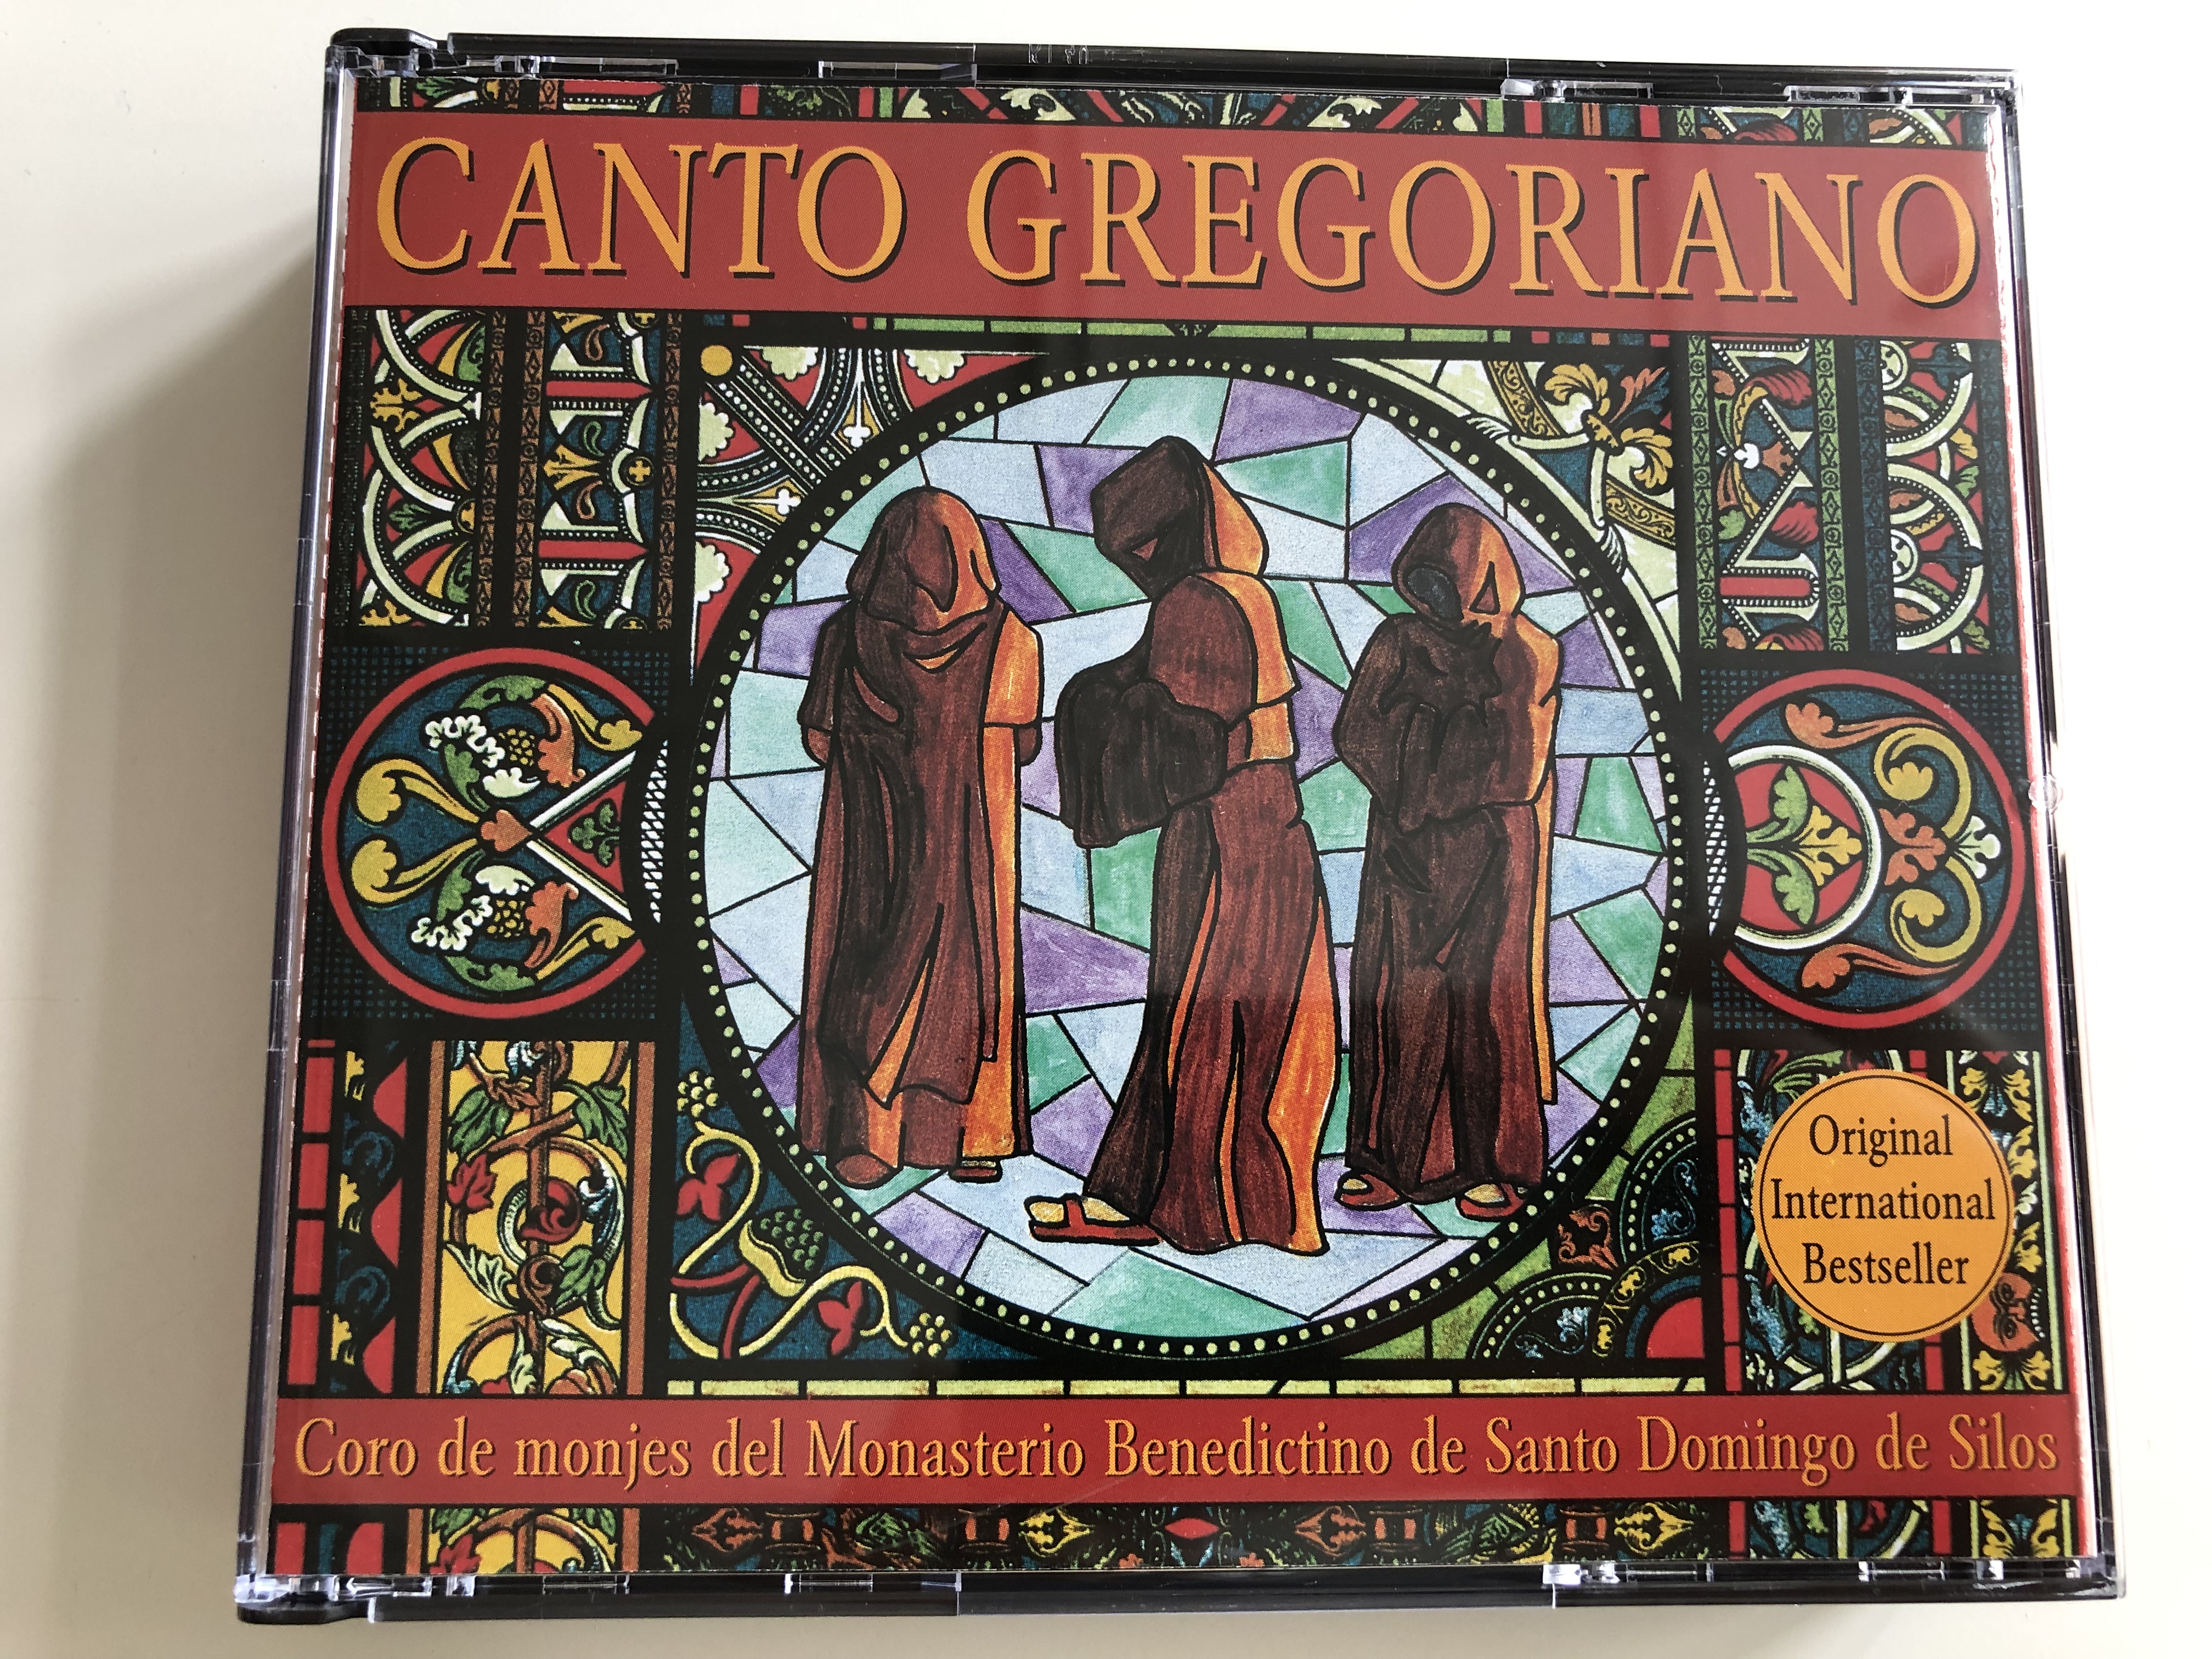 canto-gregoriano-coro-de-monjes-del-monasterio-benedictino-de-santo-domingo-de-silos-2x-audio-cd-1994-emi-classics-cms-5-65217-2-1-.jpg